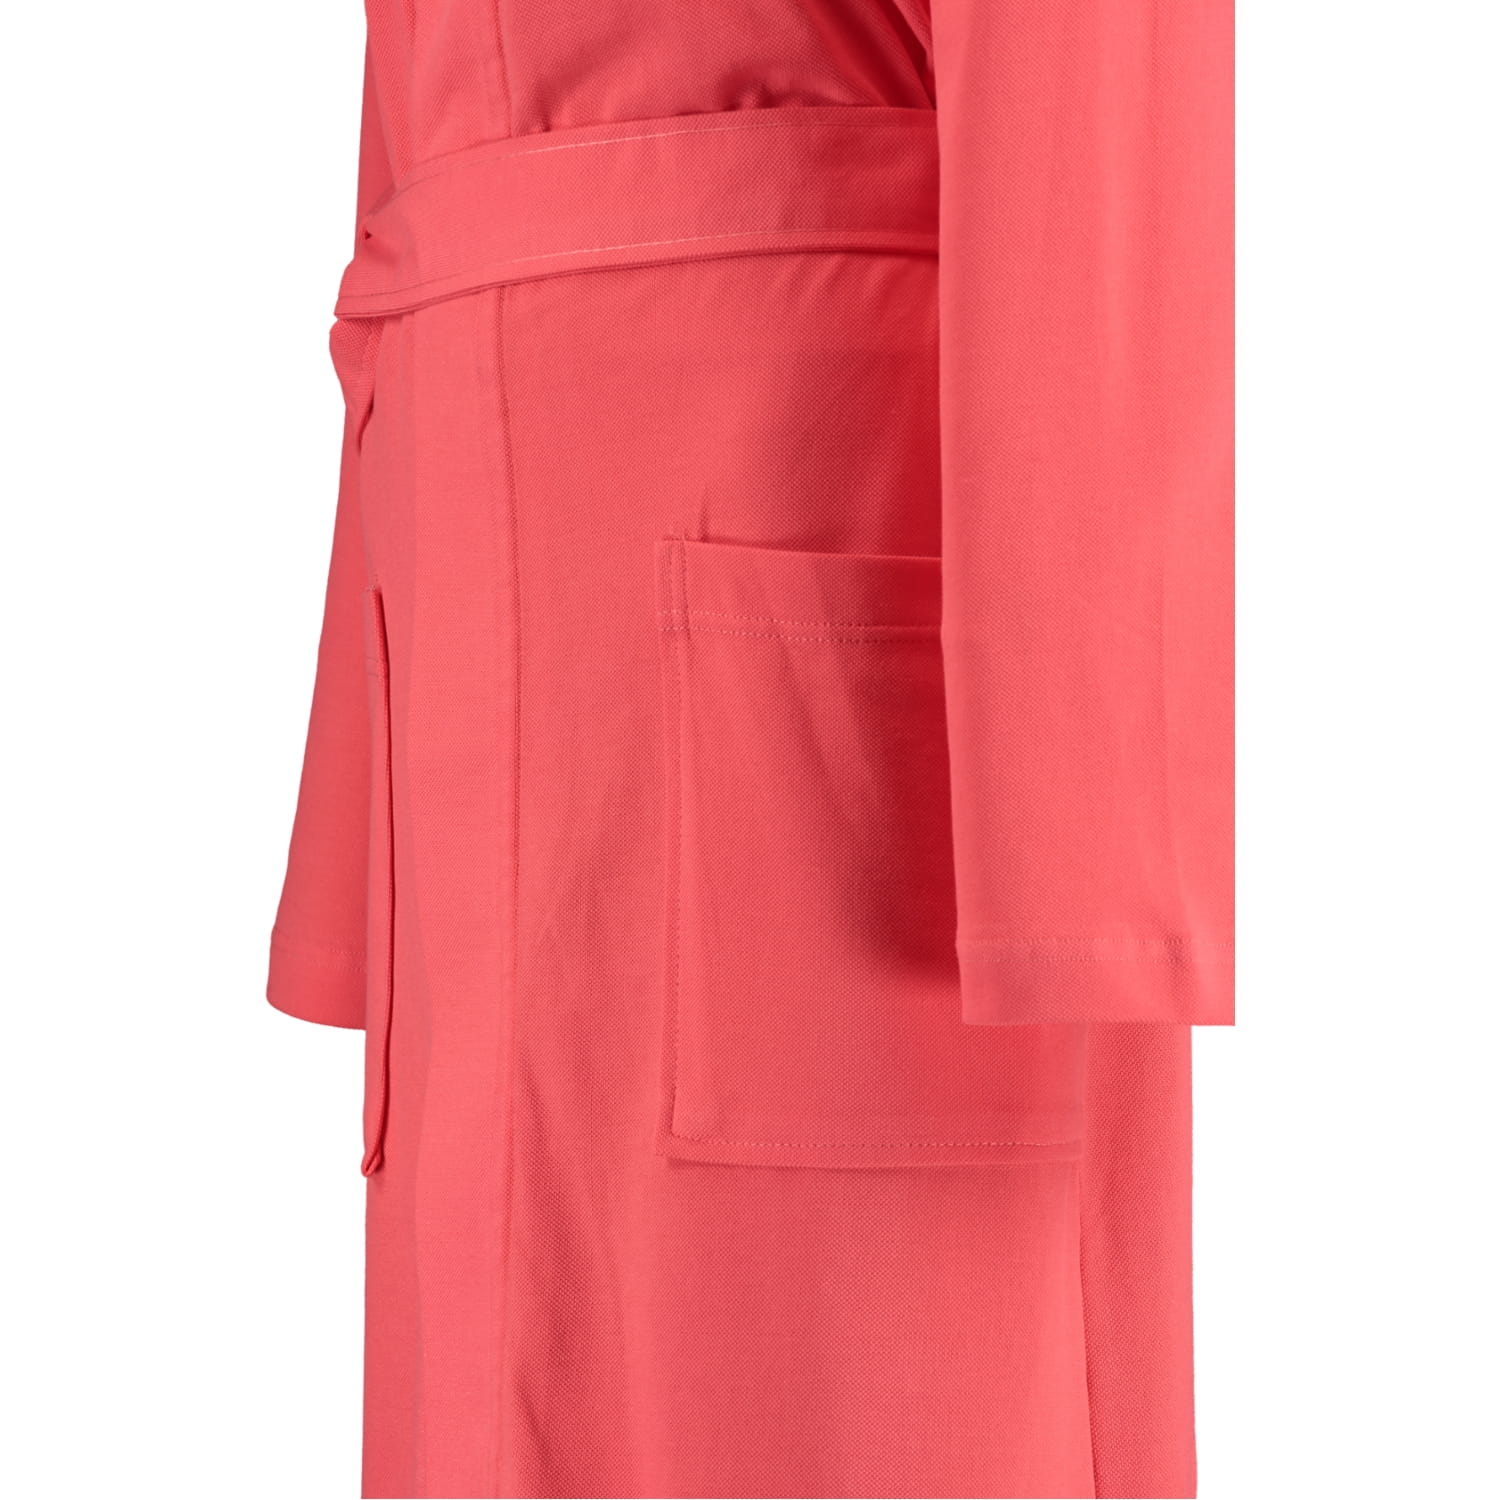 Kimono Farbe: - - Pique Bademantel Bademantel | Damen | 1654 coral 21 - Damen JOOP